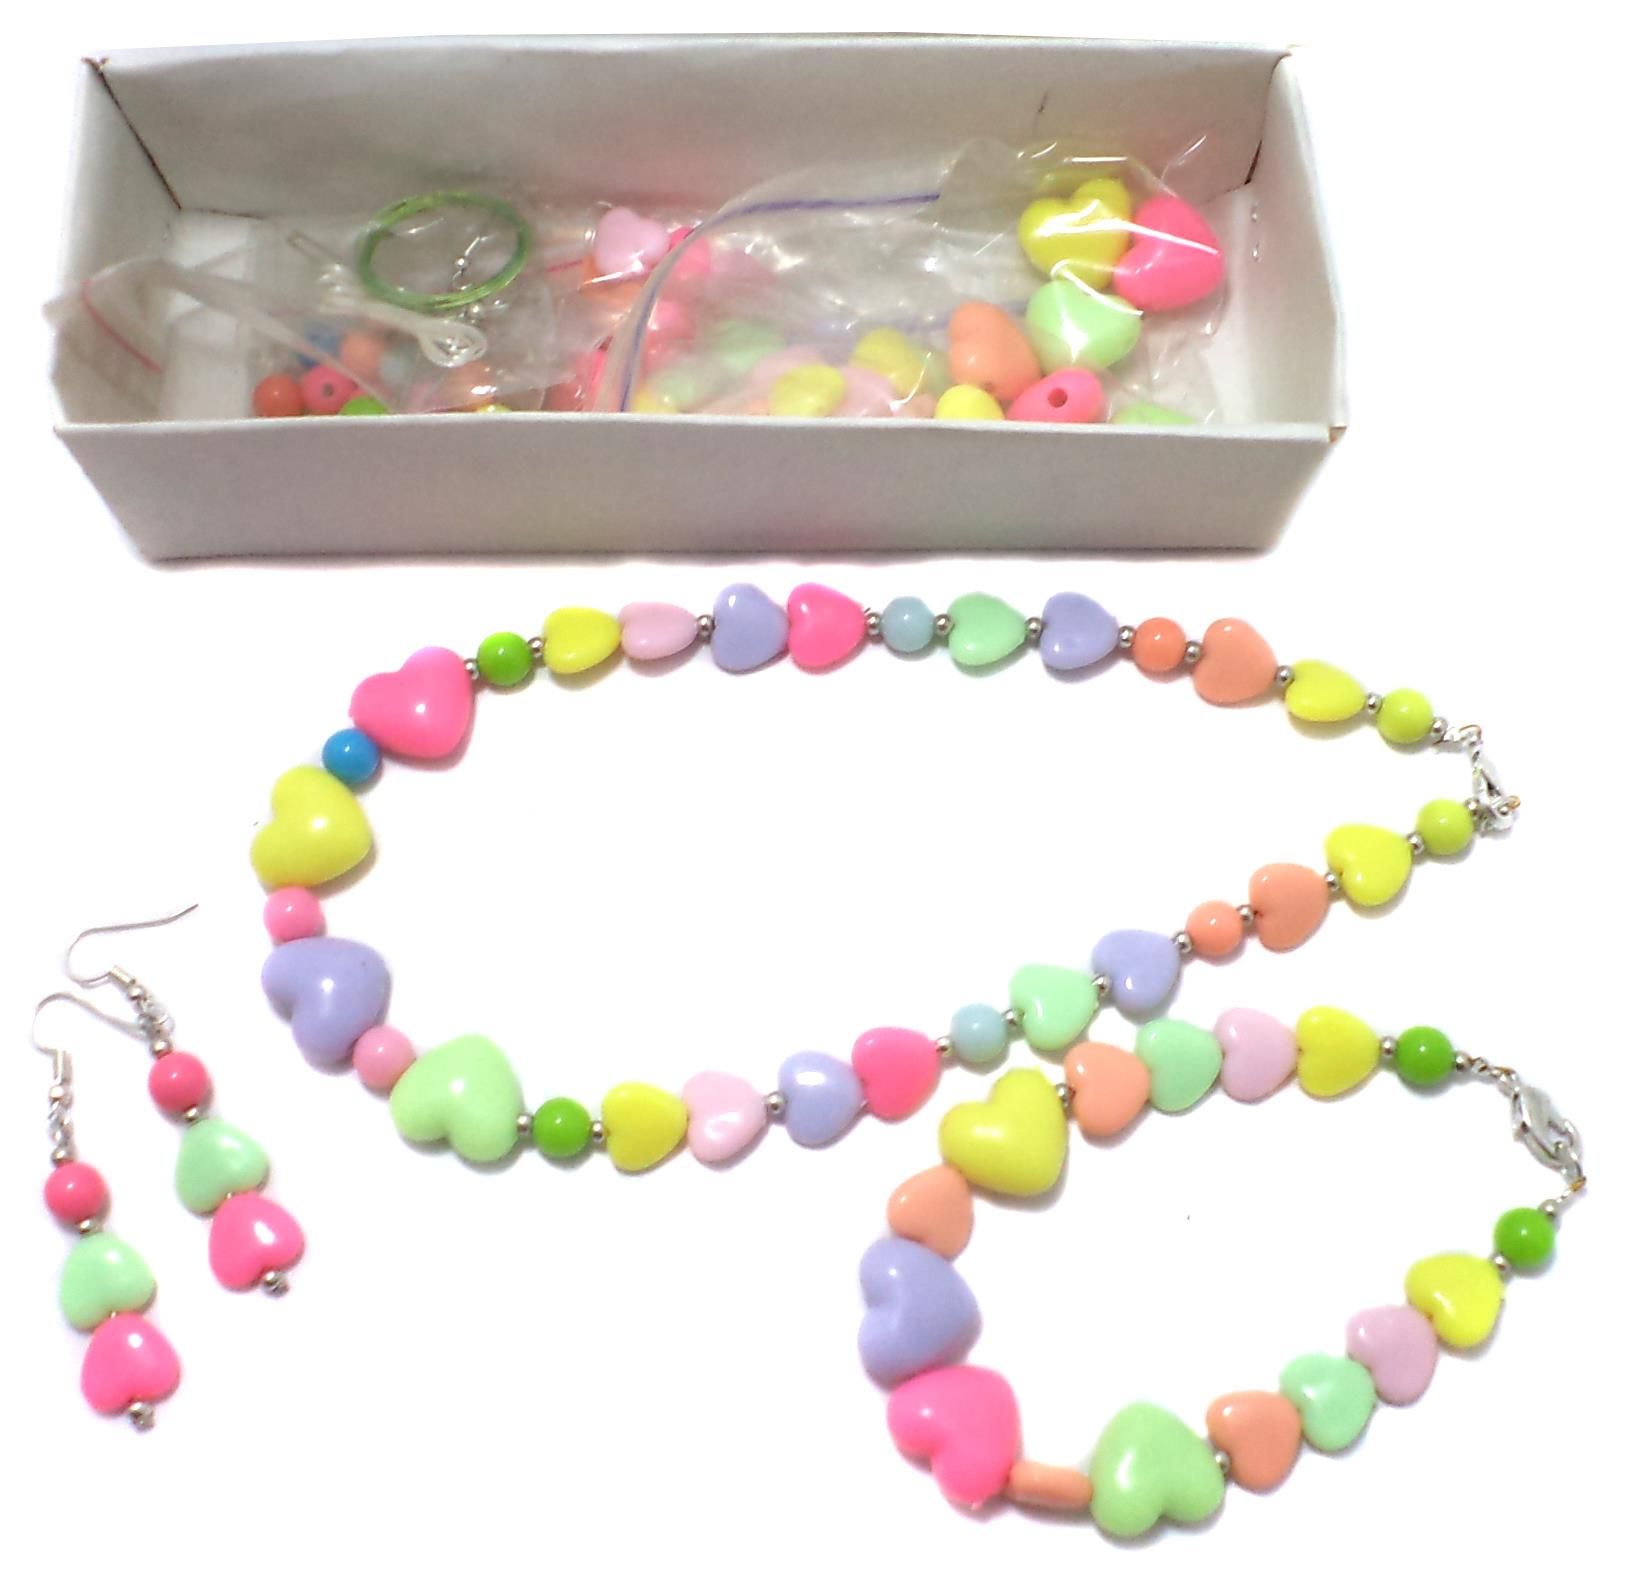 Buy Kids Jewellery Making Heart Acrylic Beads DIY Kit Online India at Beadsnfashion